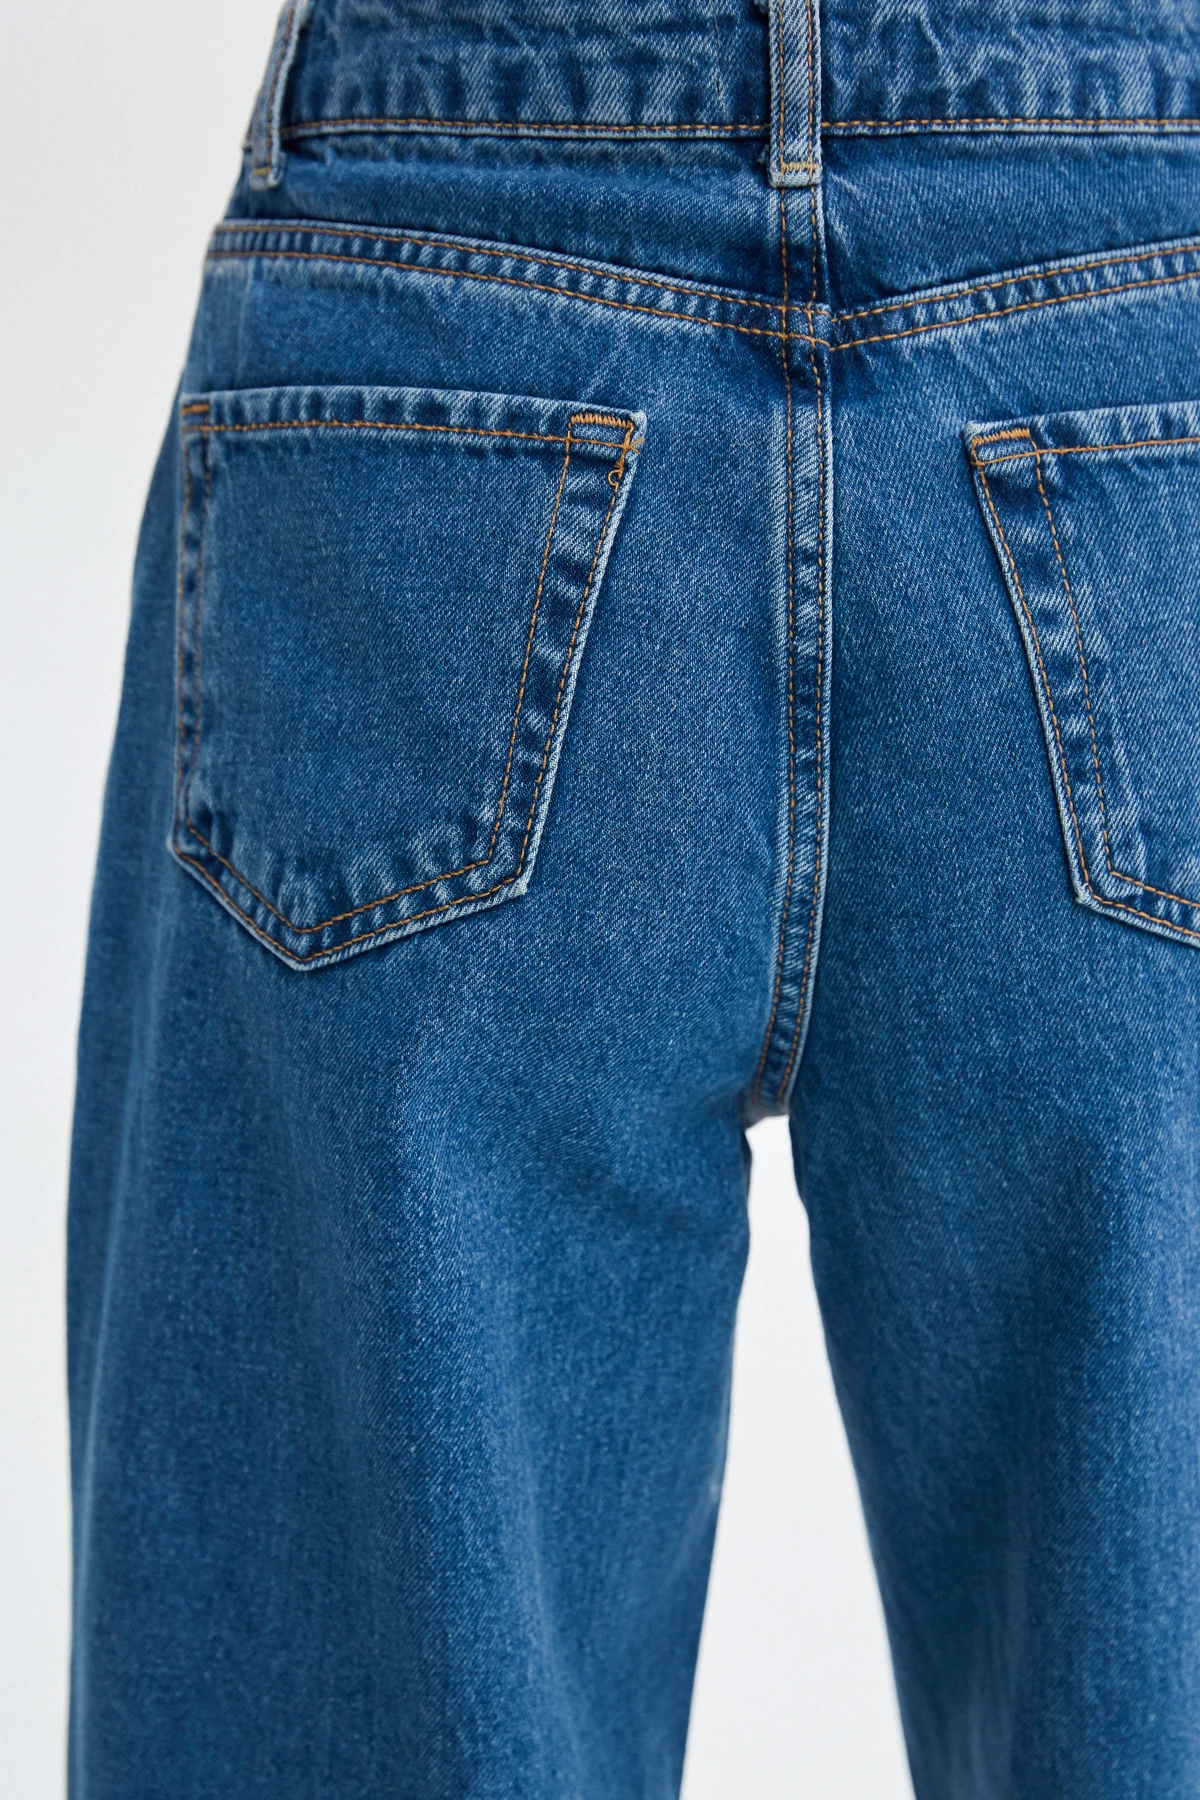 Navy blue straight-cut jeans, photo 3